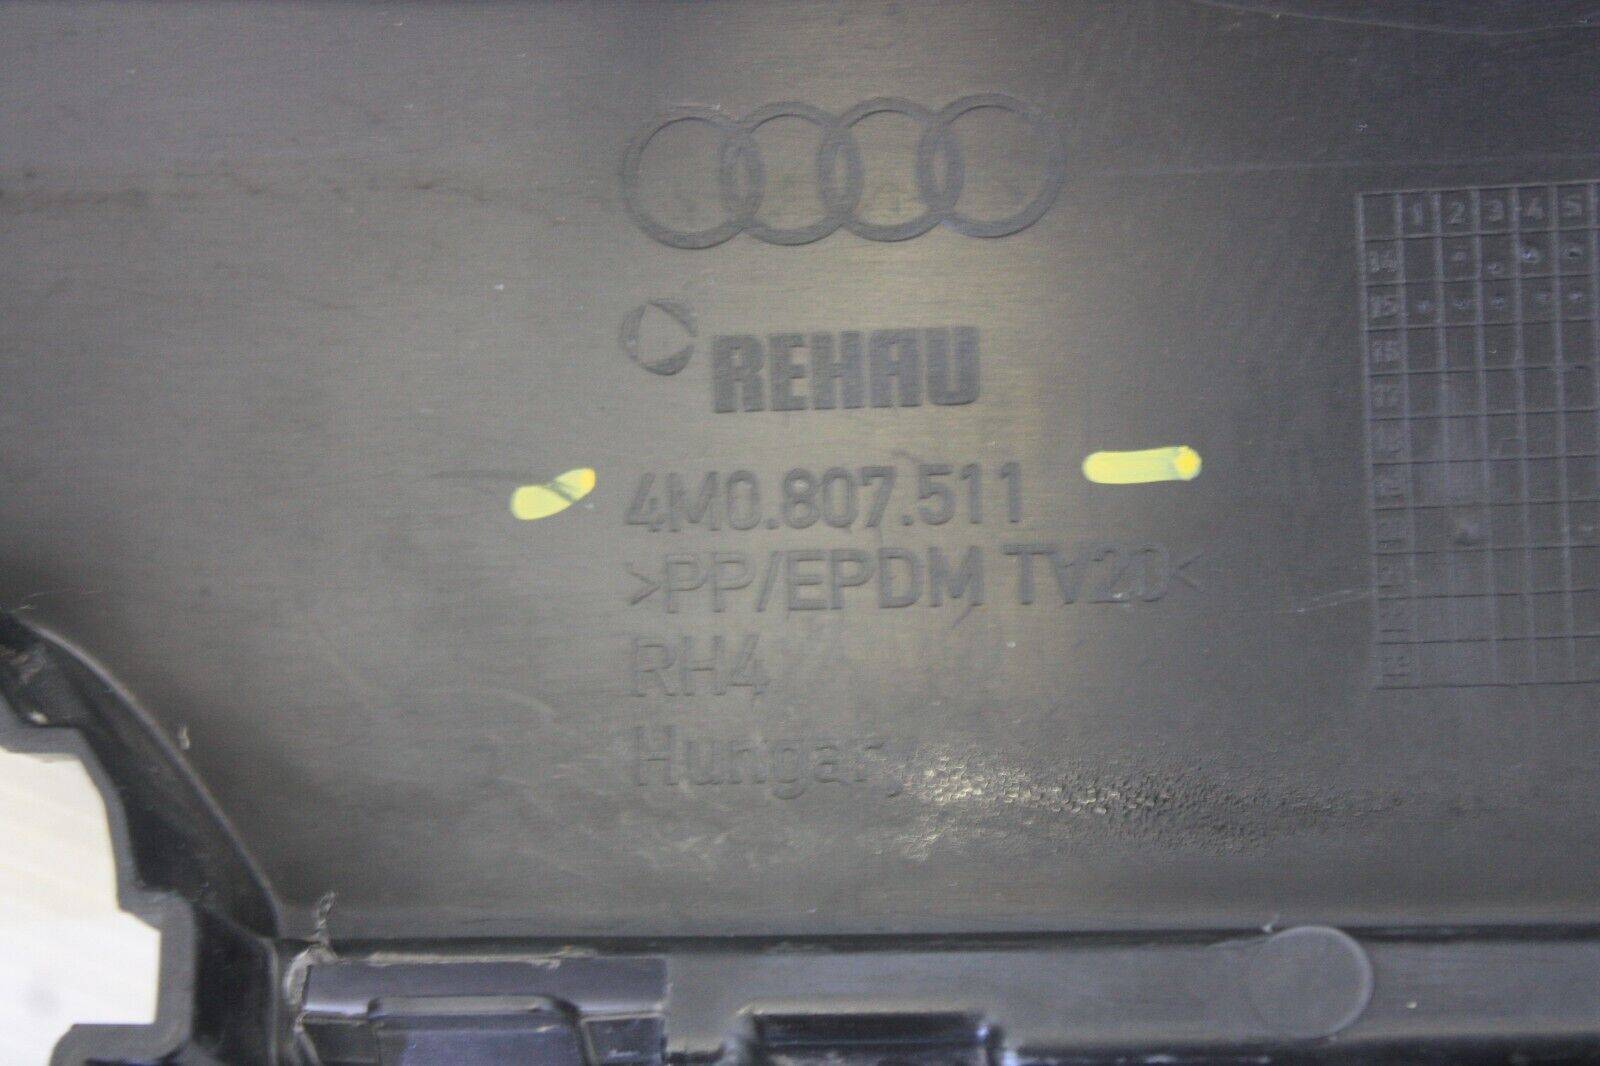 Audi-Q7-S-Line-Rear-Bumper-Upper-Section-2015-TO-2019-4M0807511-Genuine-175694146660-8